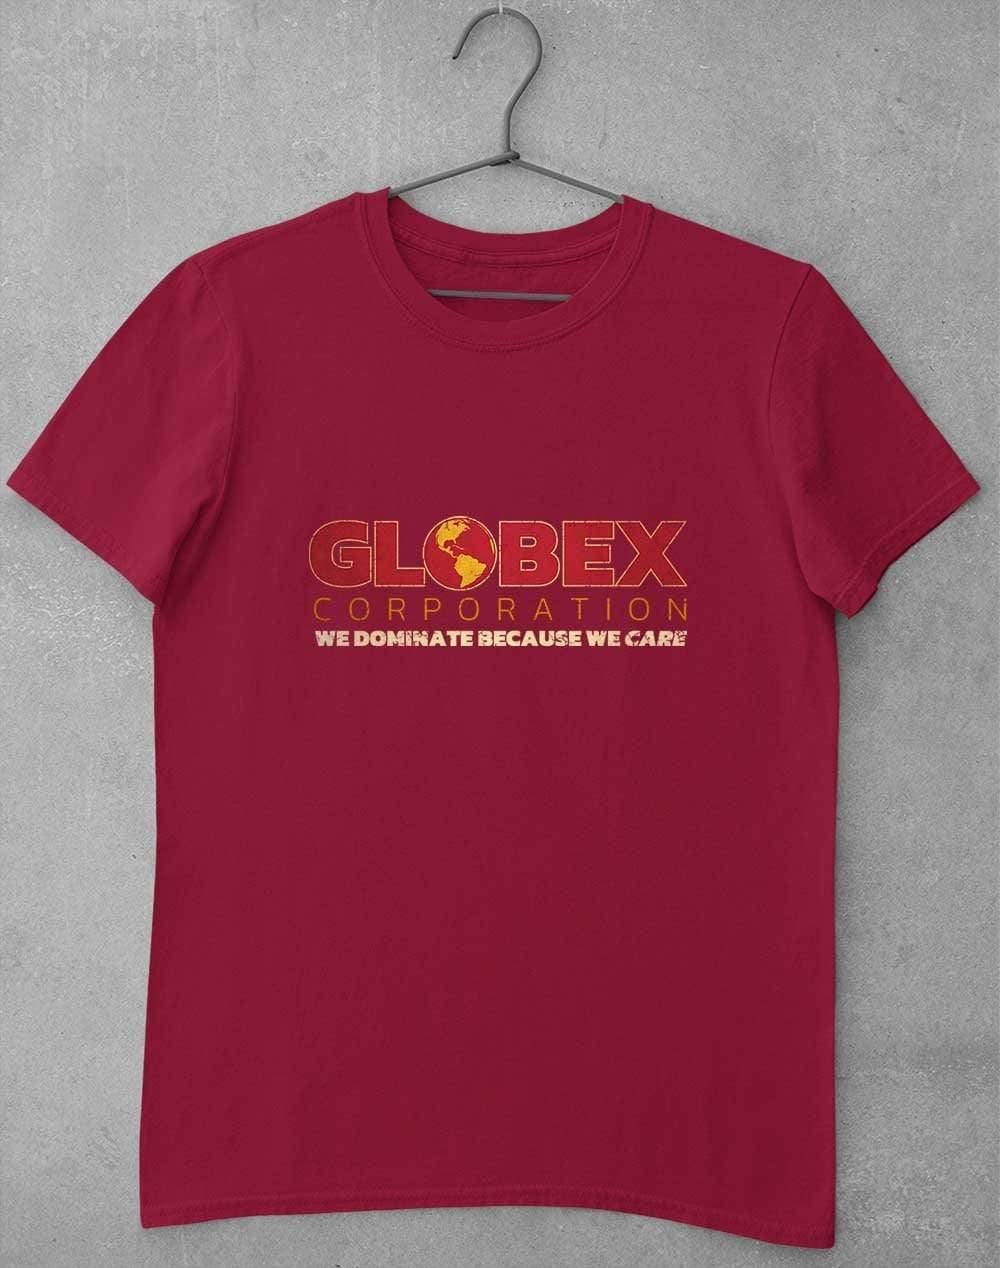 Globex Corporation T-Shirt S / Cardinal Red  - Off World Tees